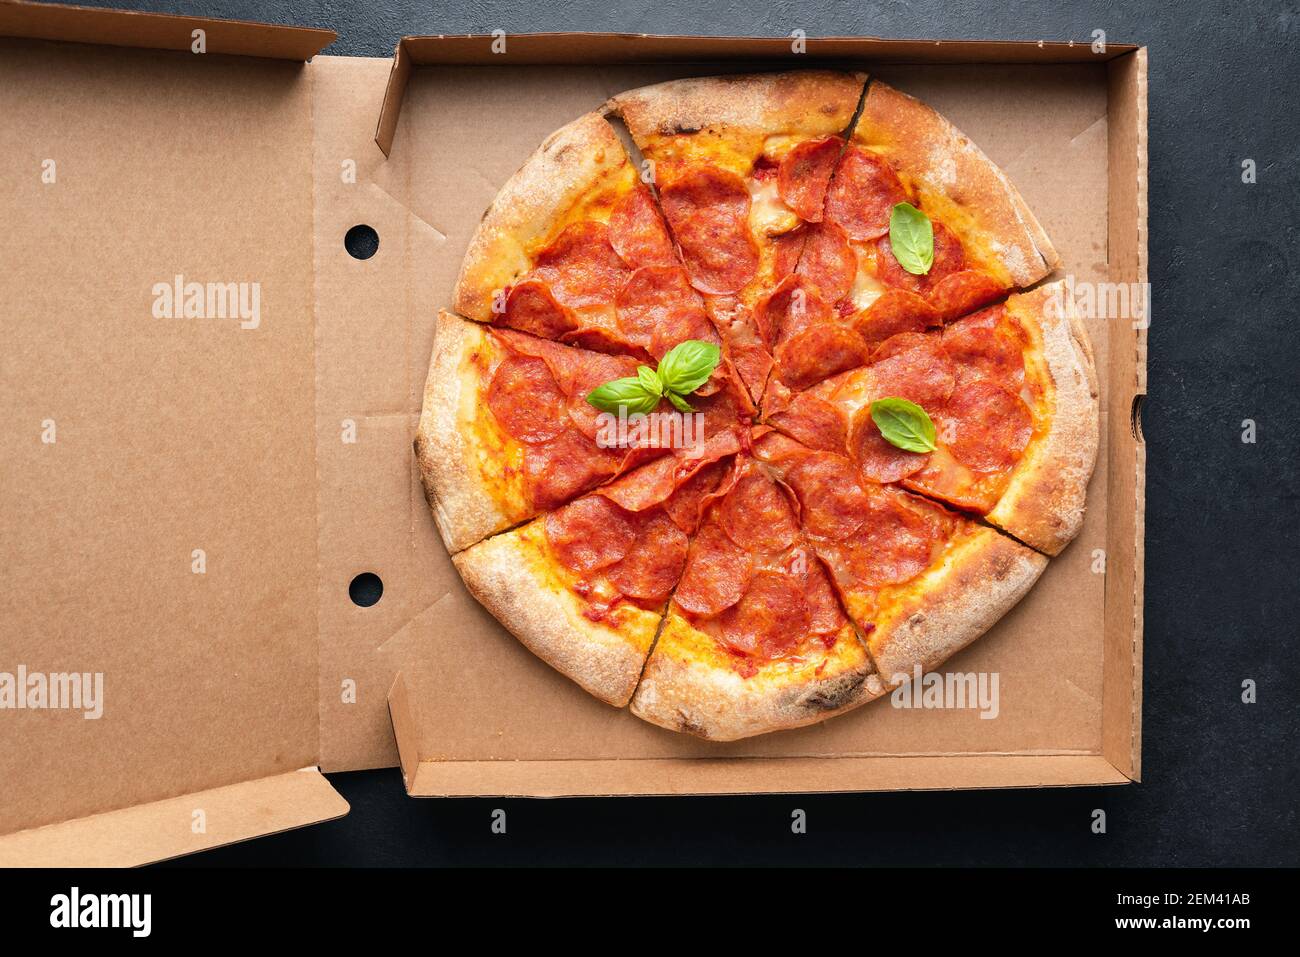 Pepperoni pizza in carton box. Pizza delivery. Top view Stock Photo